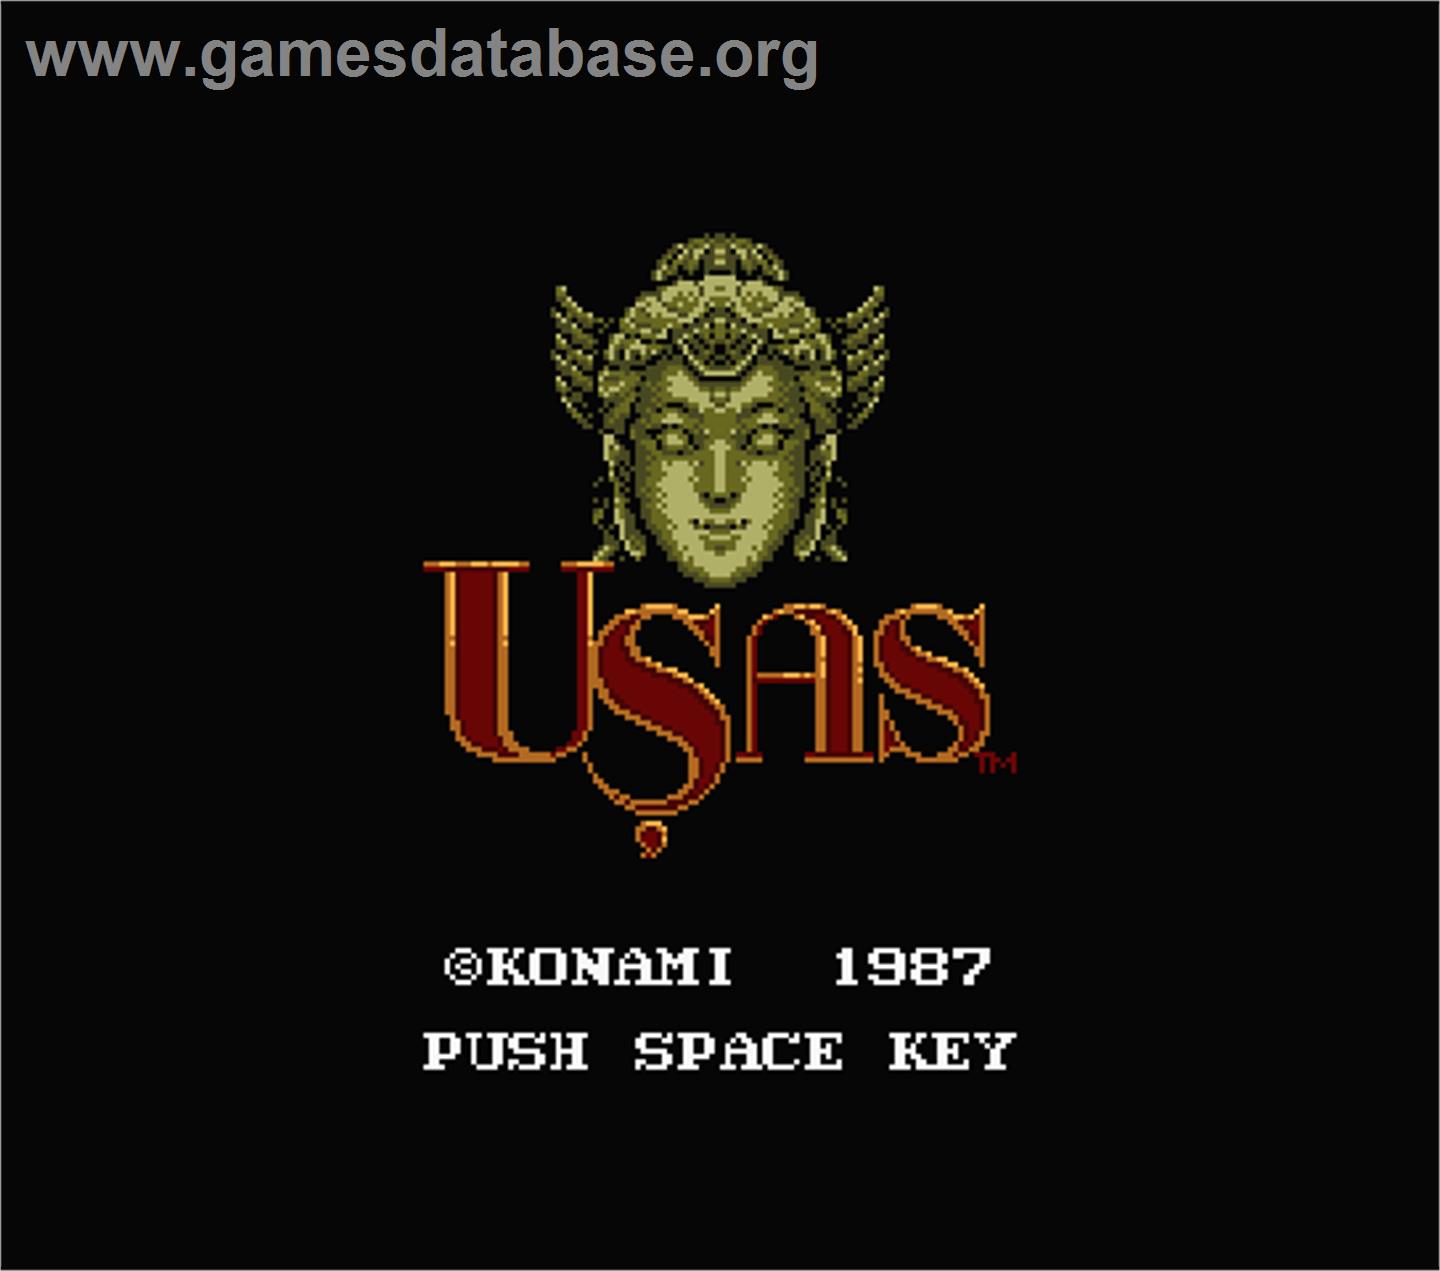 Treasure of Usas - MSX 2 - Artwork - Title Screen